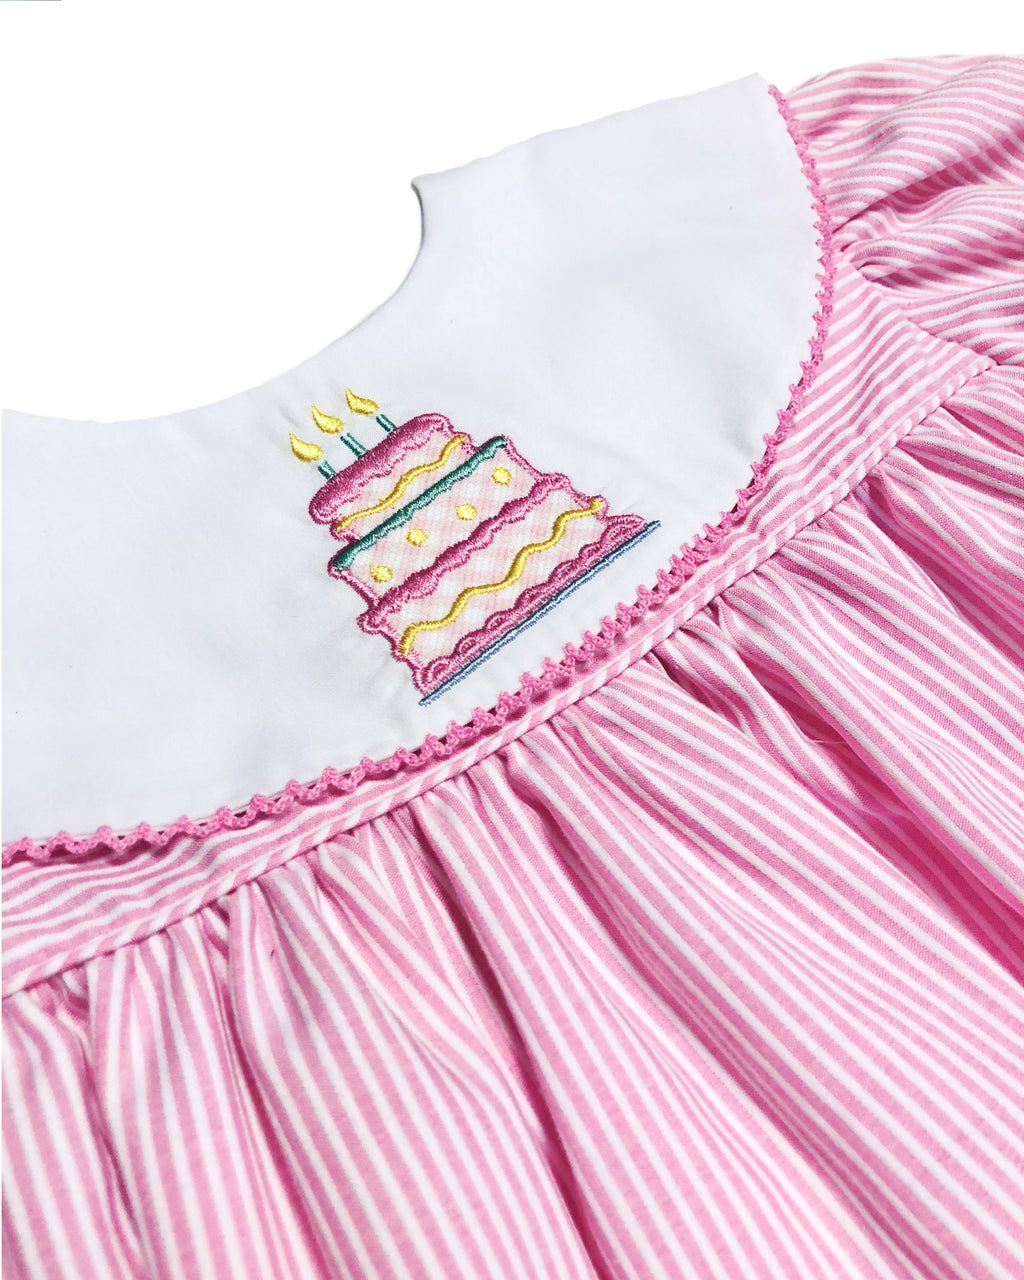 Double collar Pink stripes girl's Float dress - Little Threads Inc. Children's Clothing